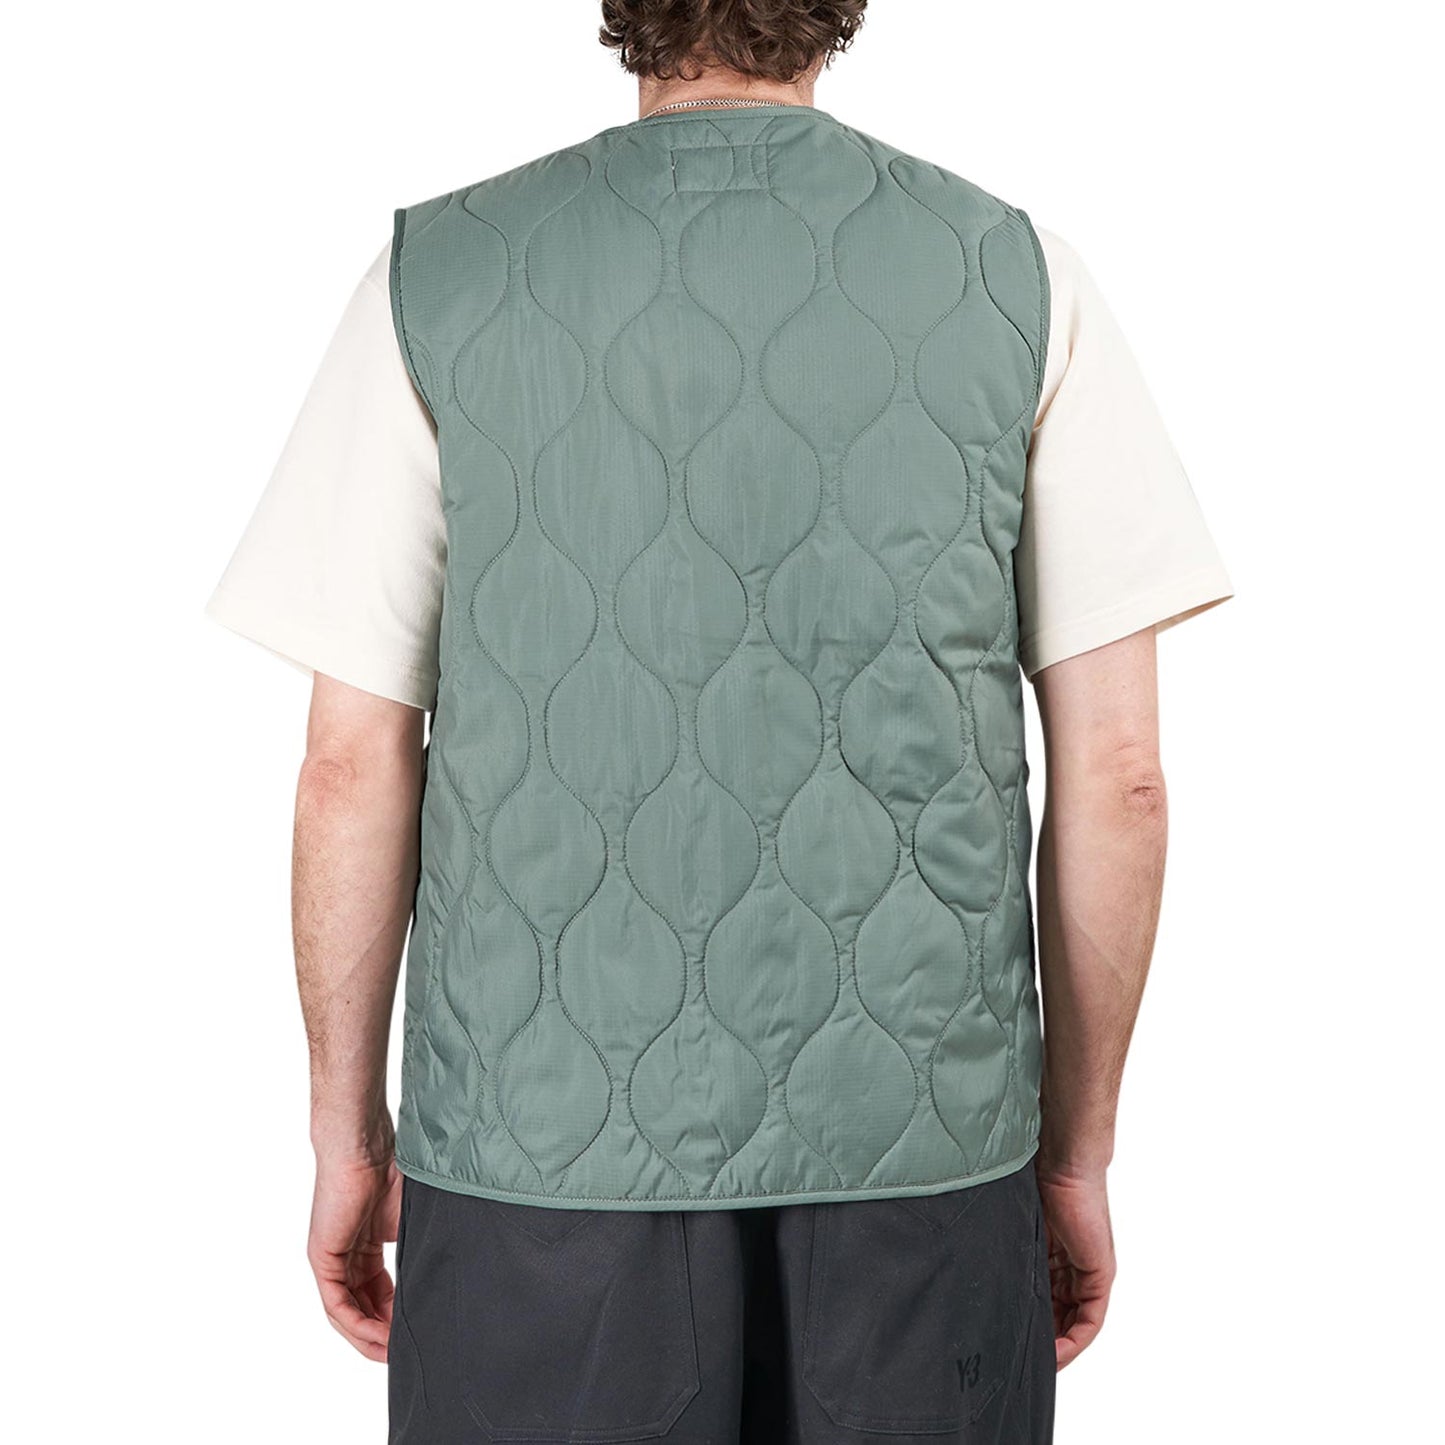 Carhartt WIP Skyton Vest (Grün)  - Cheap Cerbe Jordan Outlet